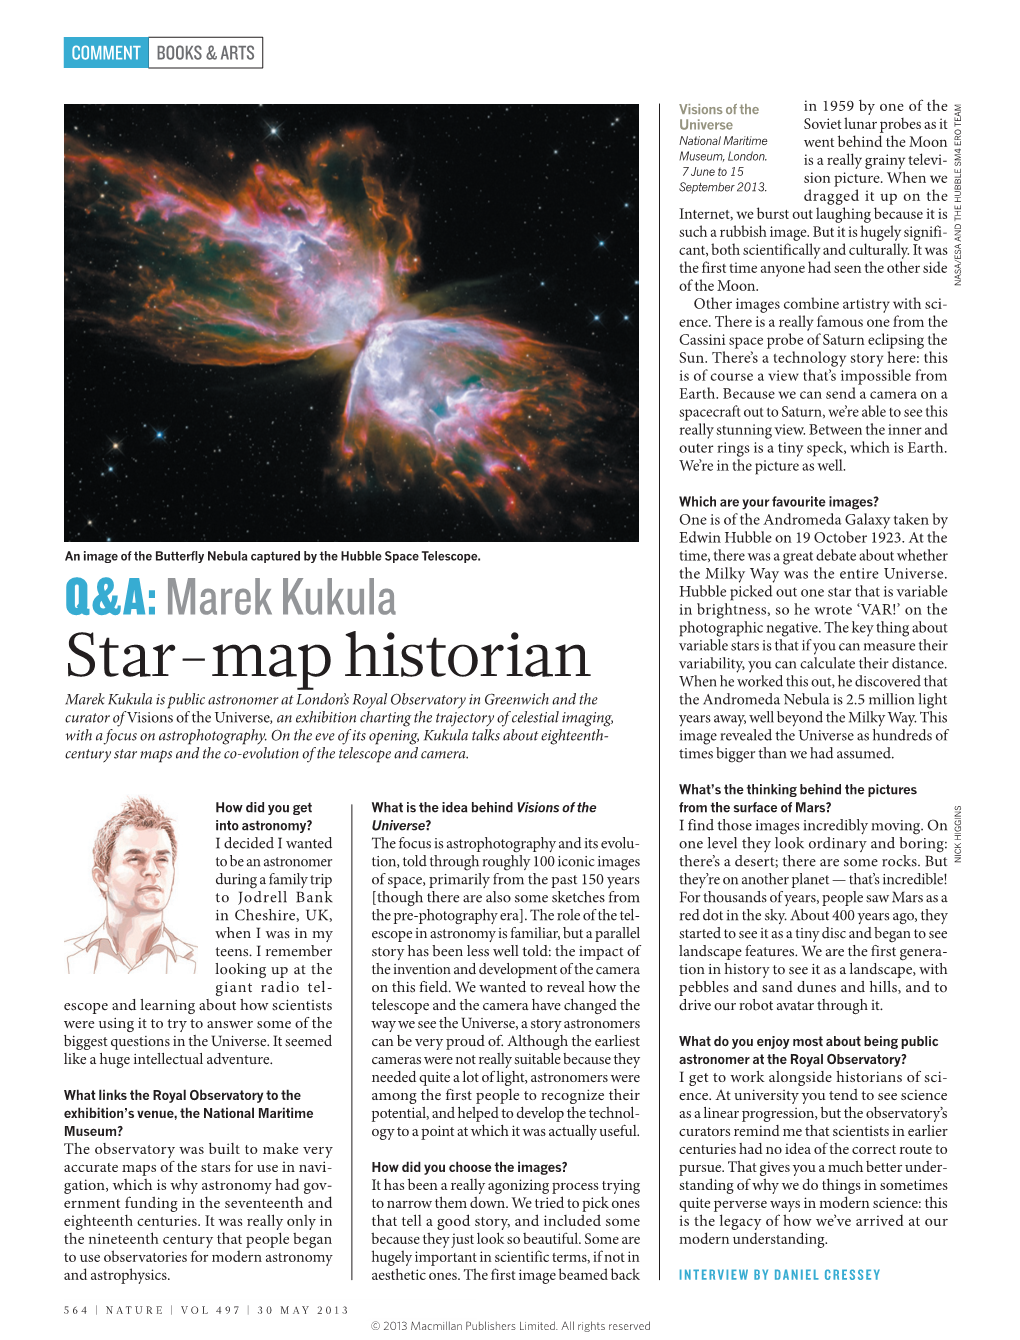 Star-Map Historian